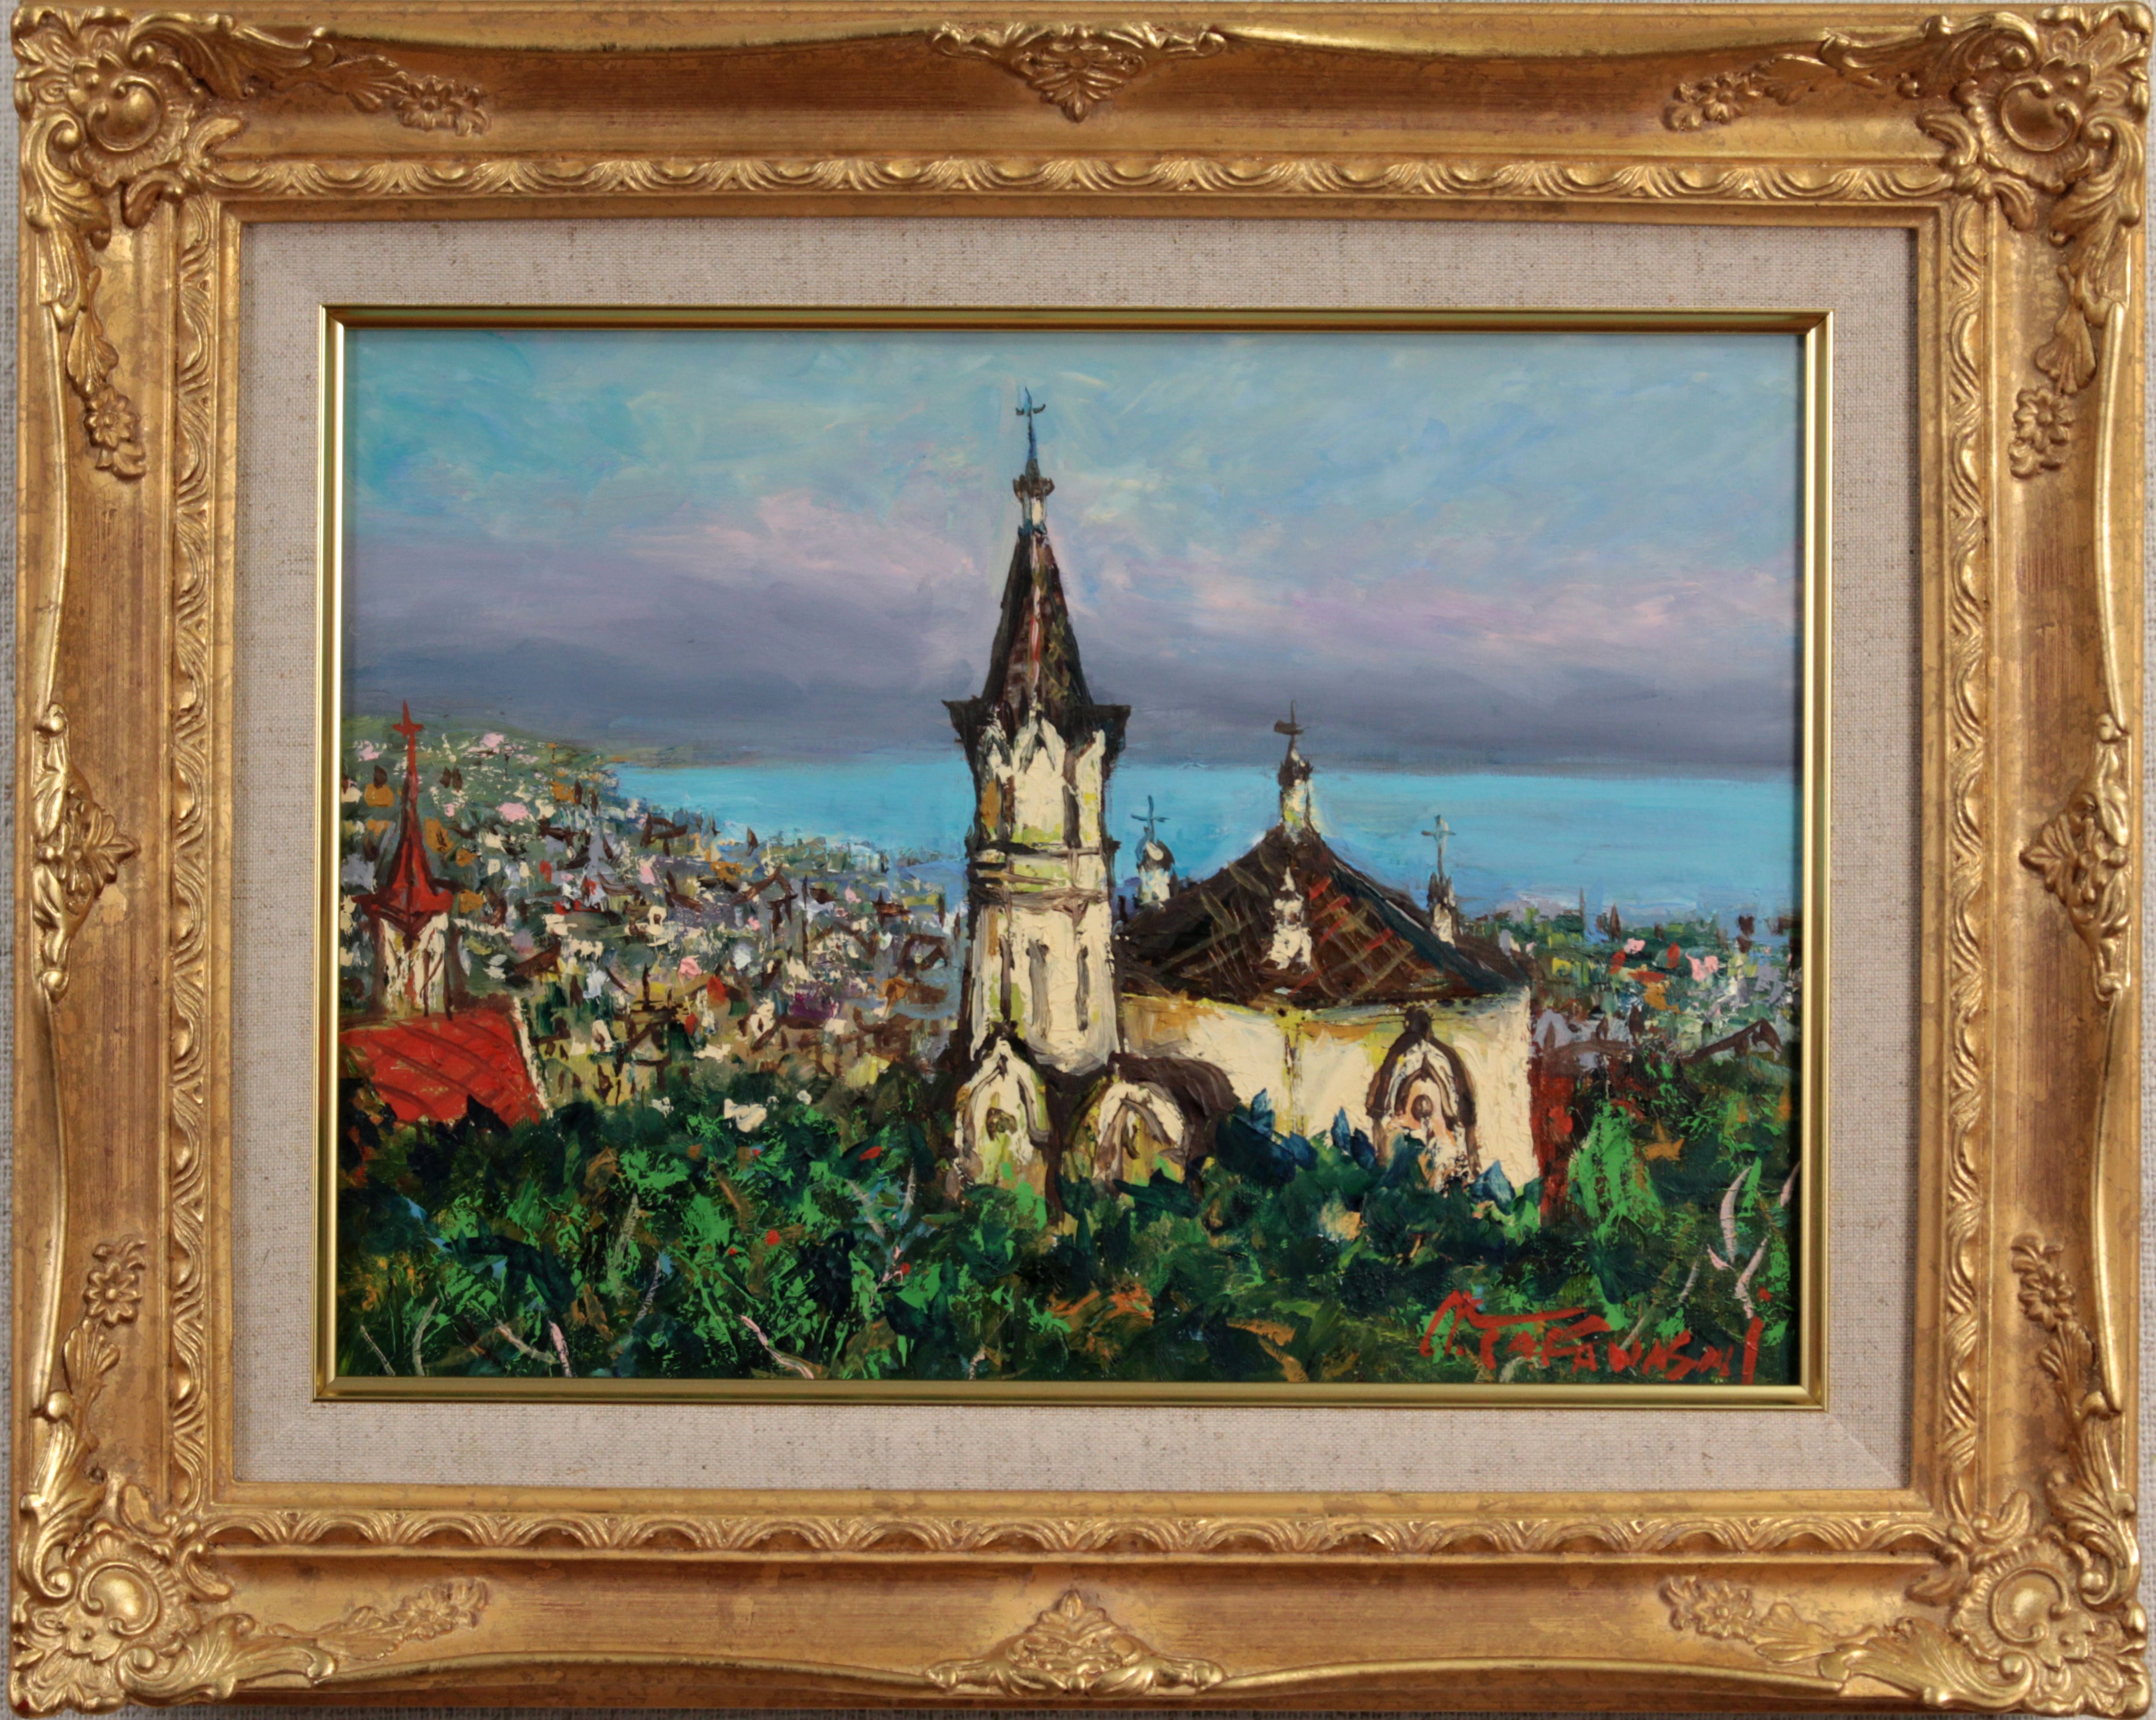 高橋益之 『ハリストス正教会』 油彩画 - 北海道画廊